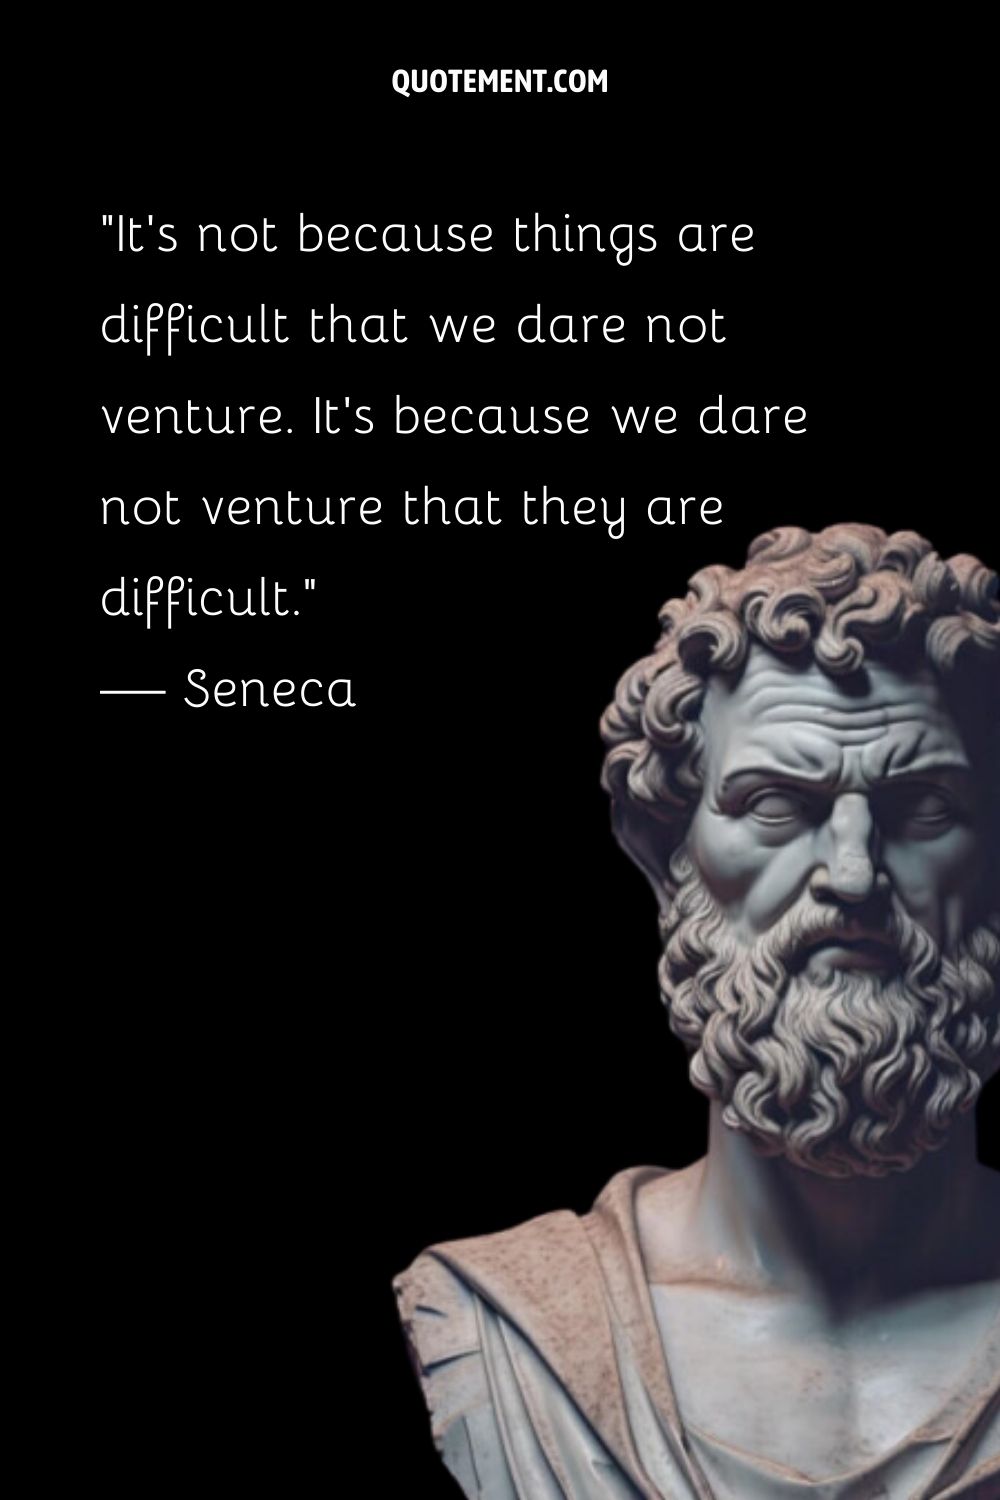 Seneca's wisdom chiseled in marble.